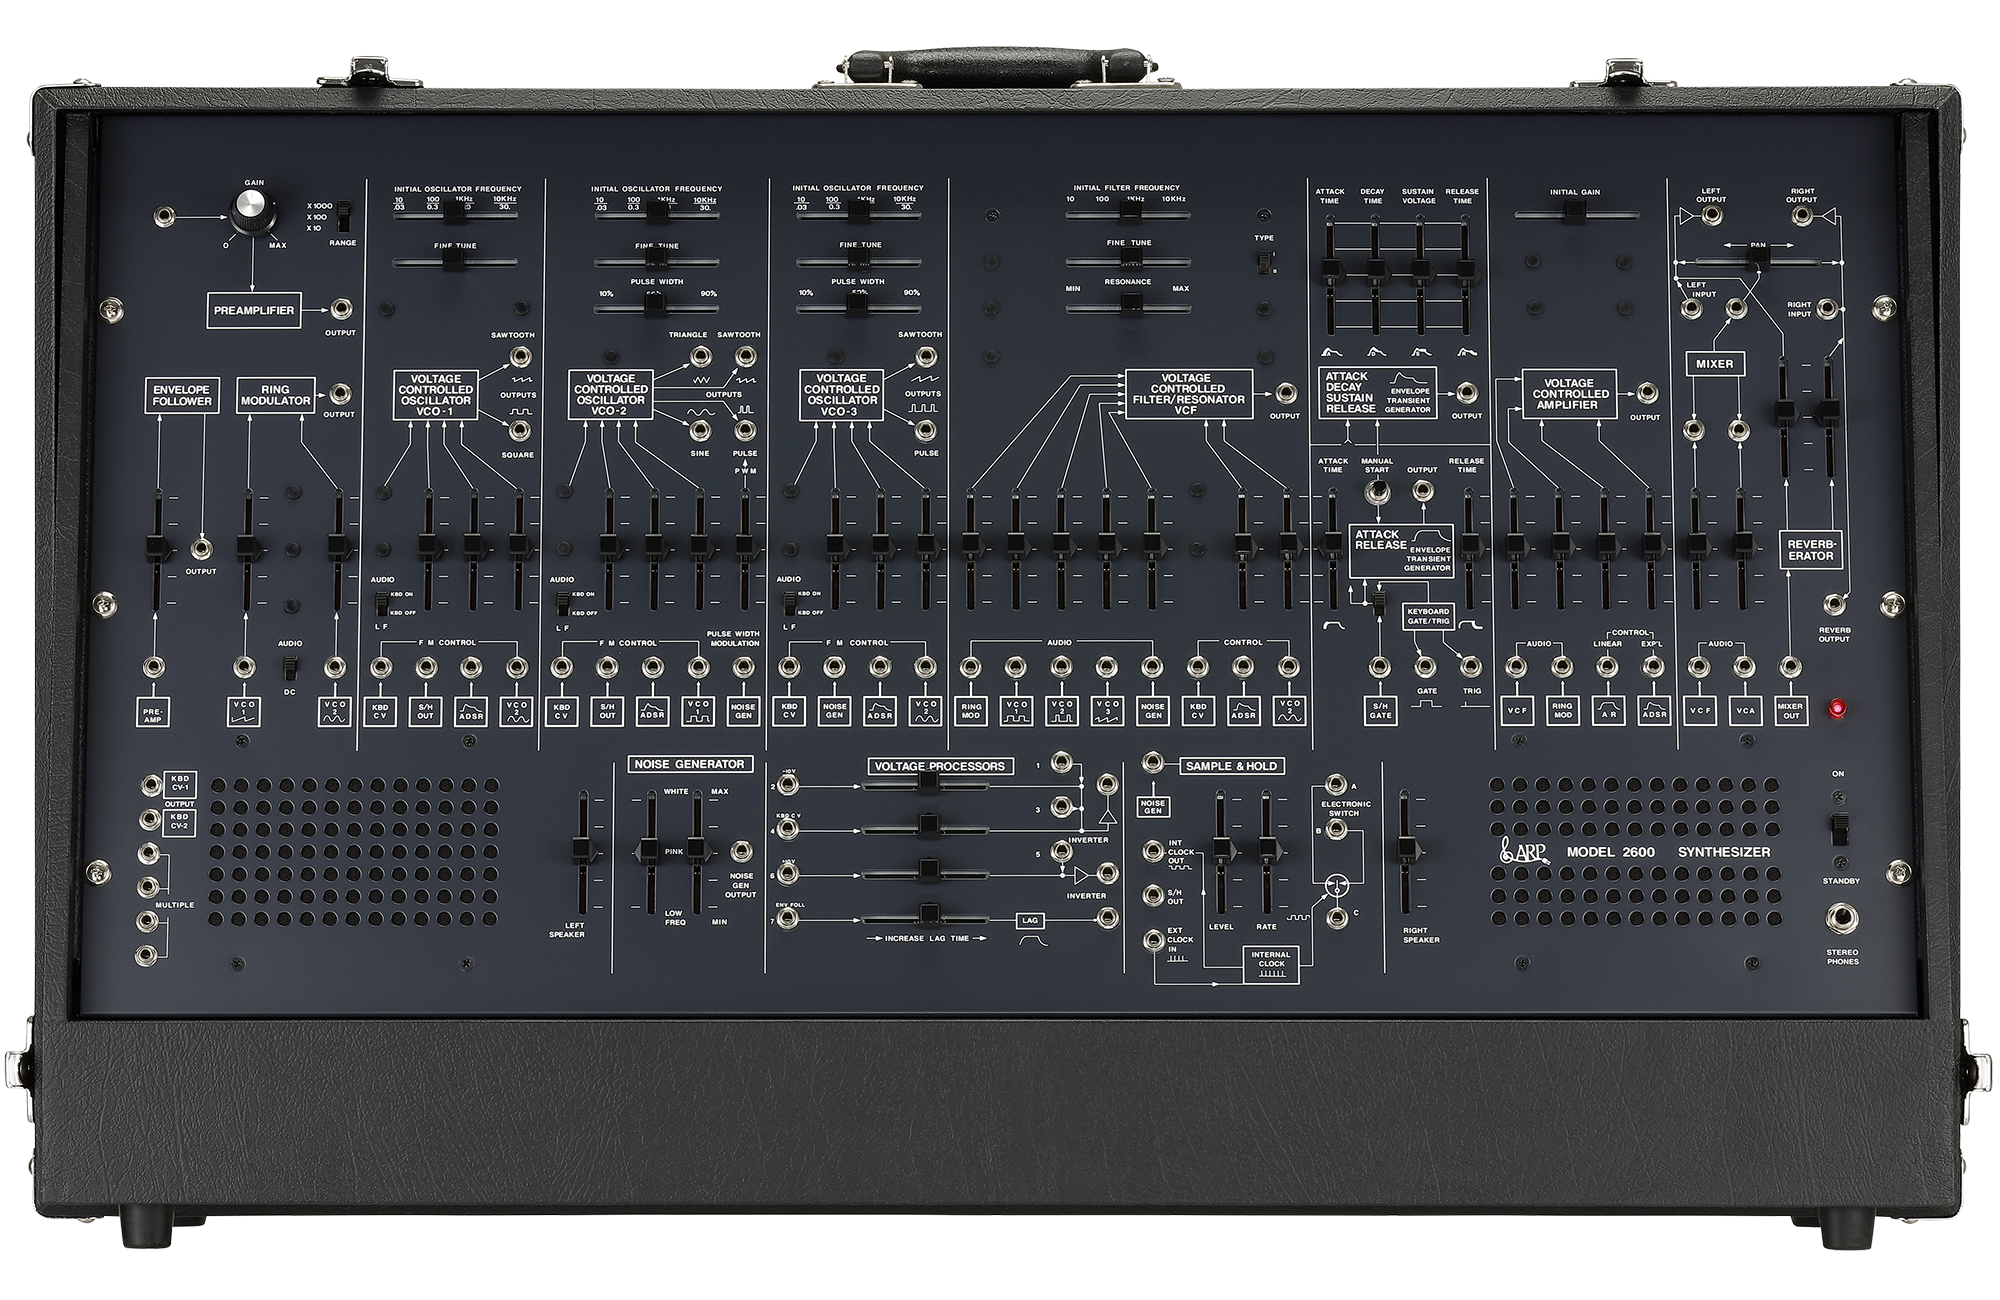 Korg ARP 2600 FS Semi-Modular Synthesizer